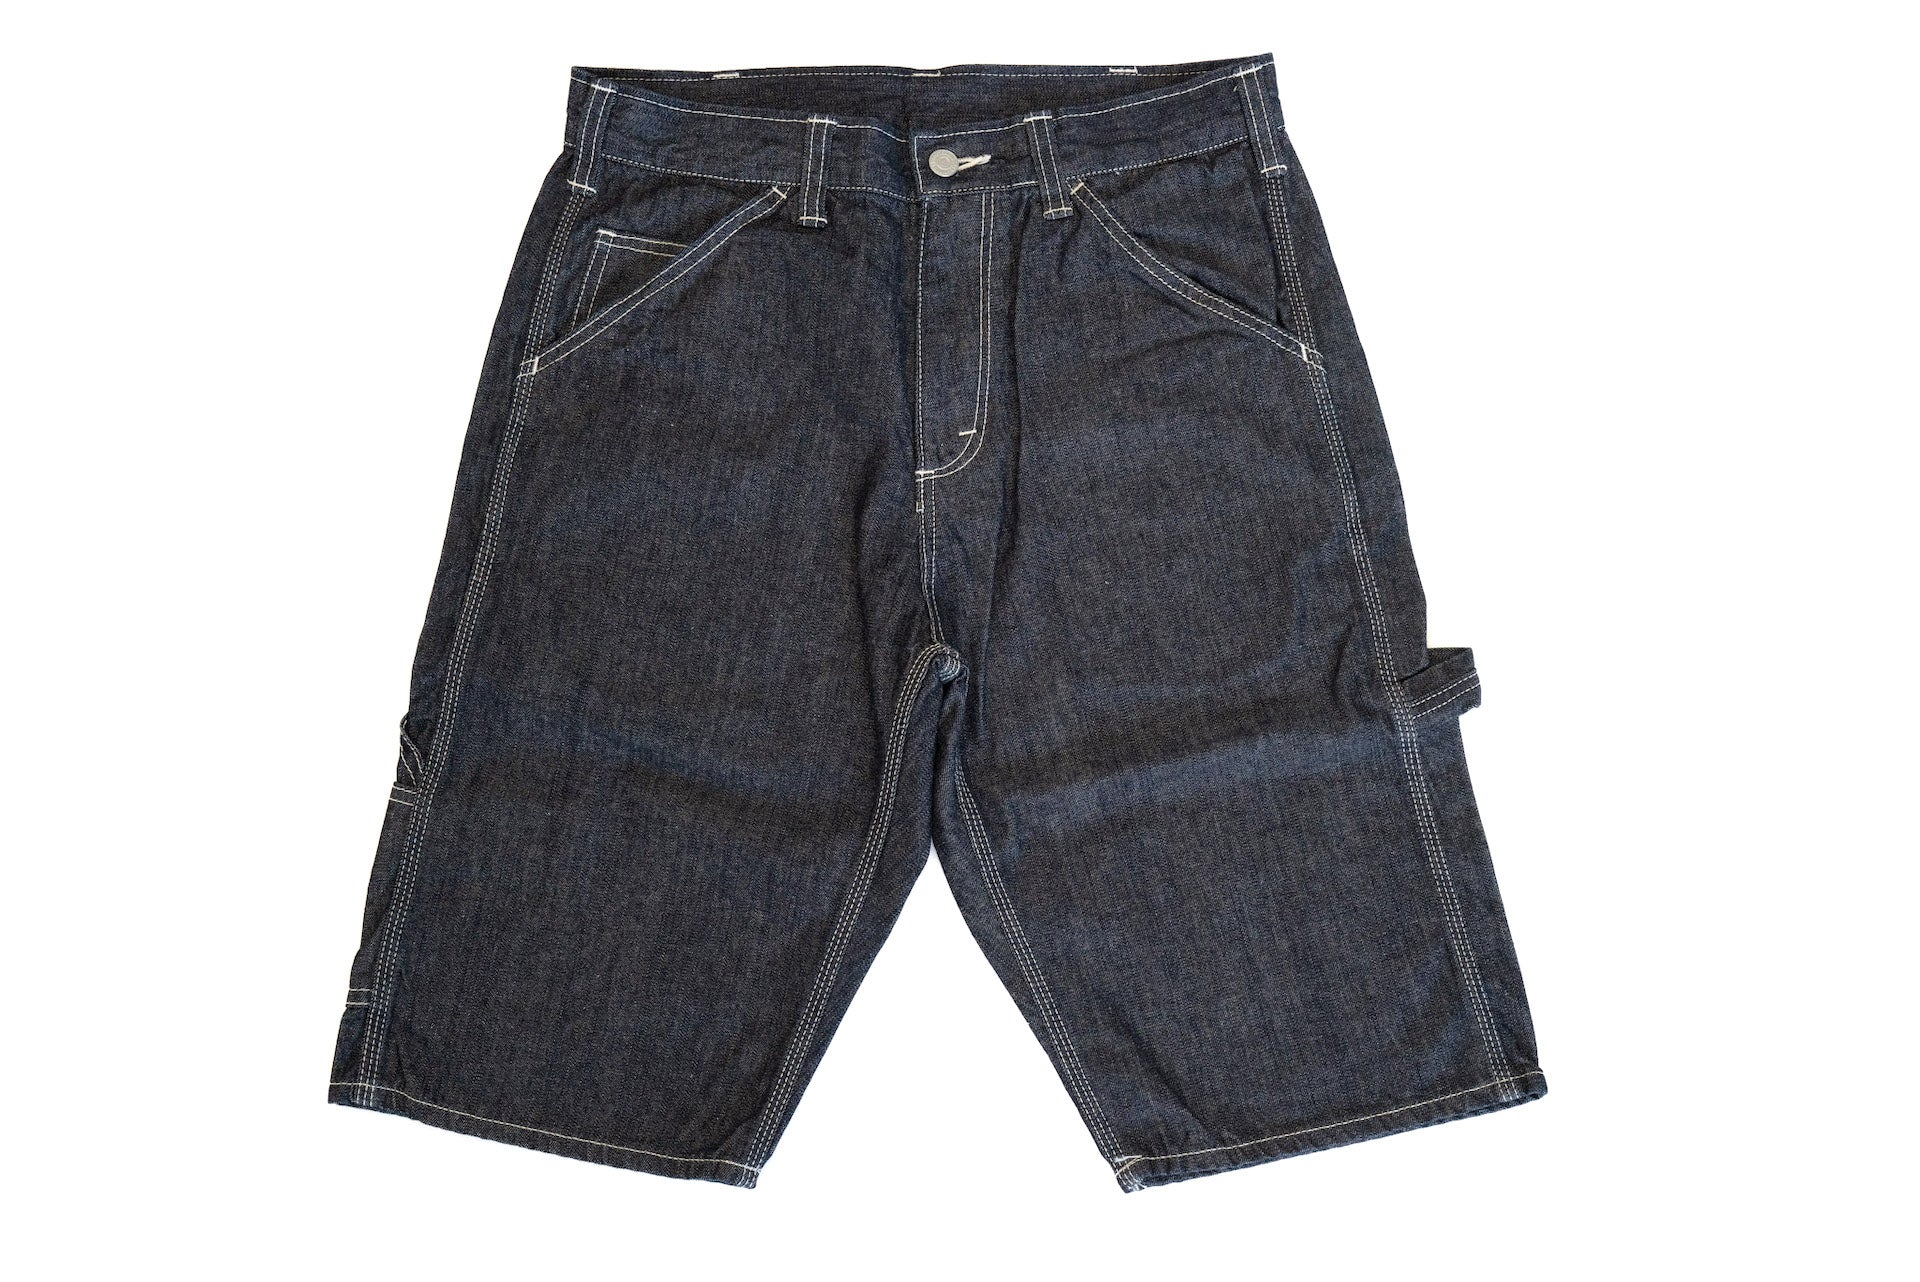 Momotaro 10oz Indigo Denim 'Carpenter' Shorts